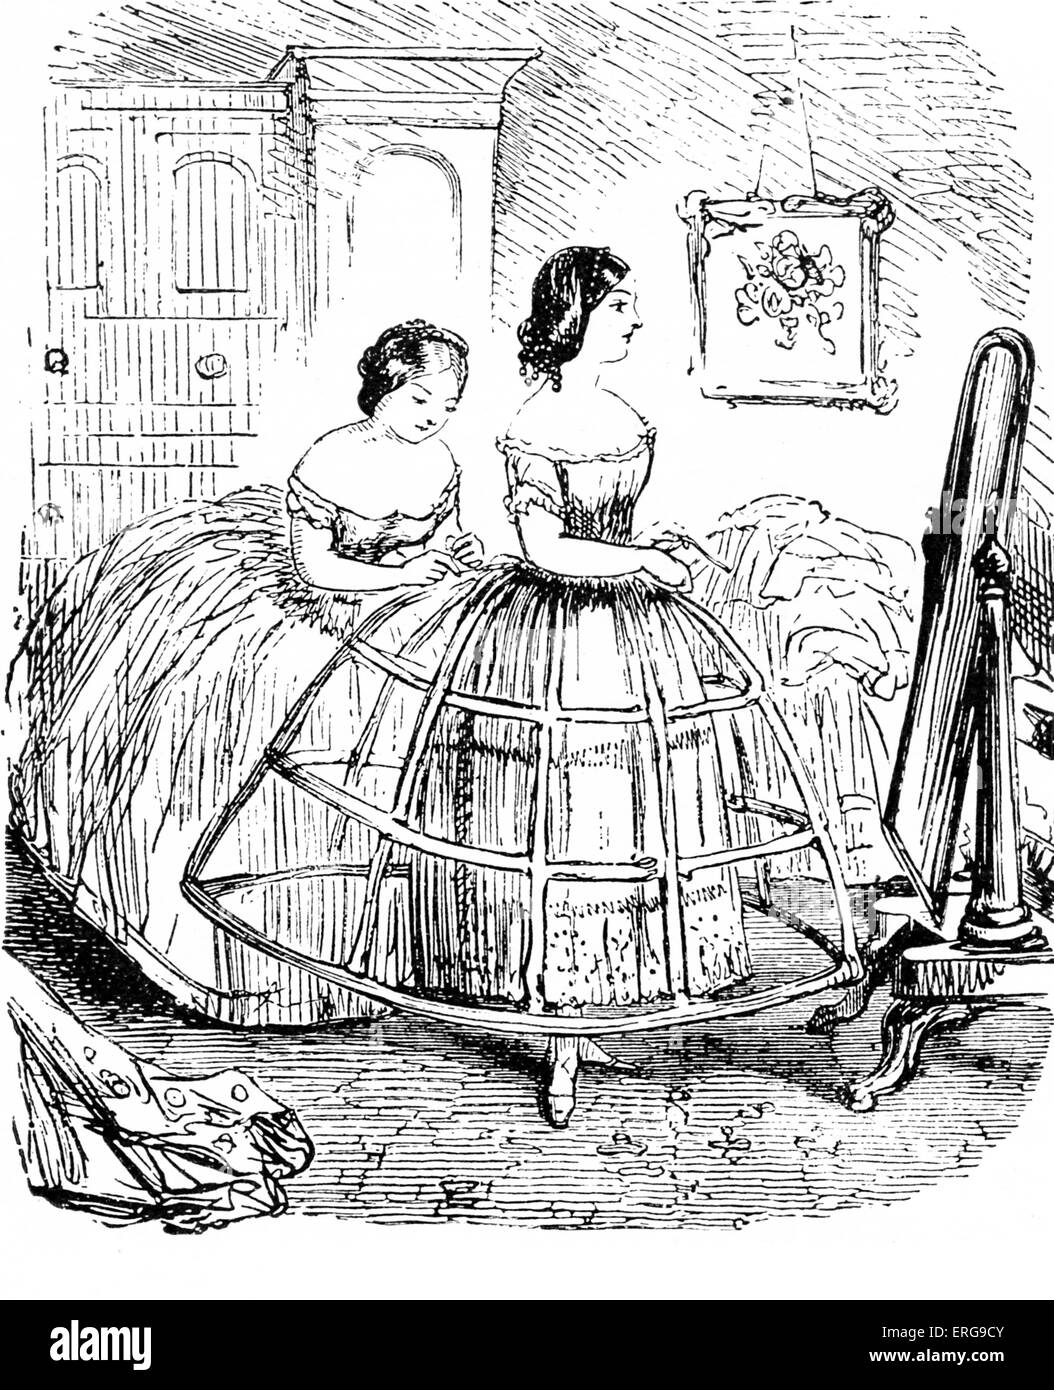 British women 's fashion - 1850s. Wearing hooped petticoats. Stock Photo